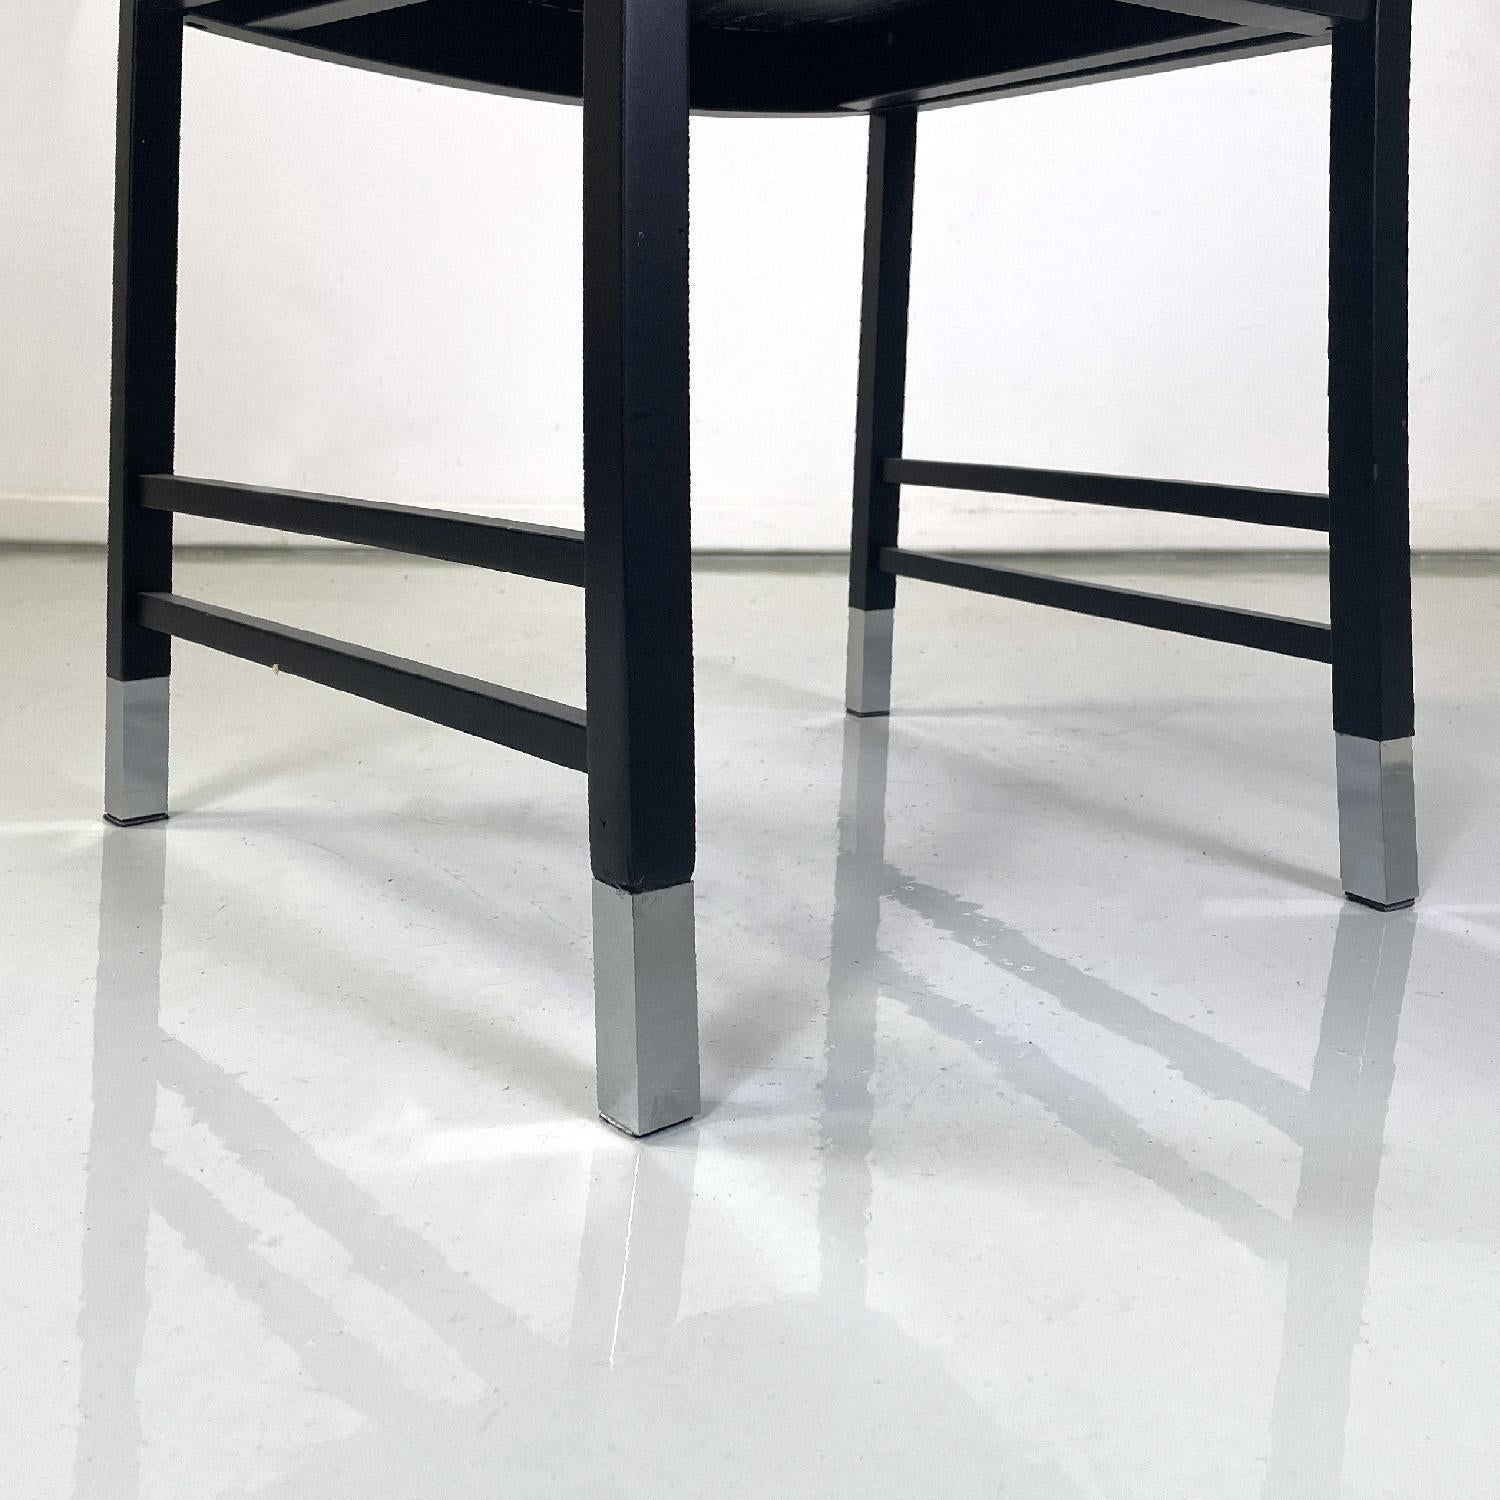 Austrian modern black wooden chairs by Ernst W. Beranek for Thonet, 1990s For Sale 6